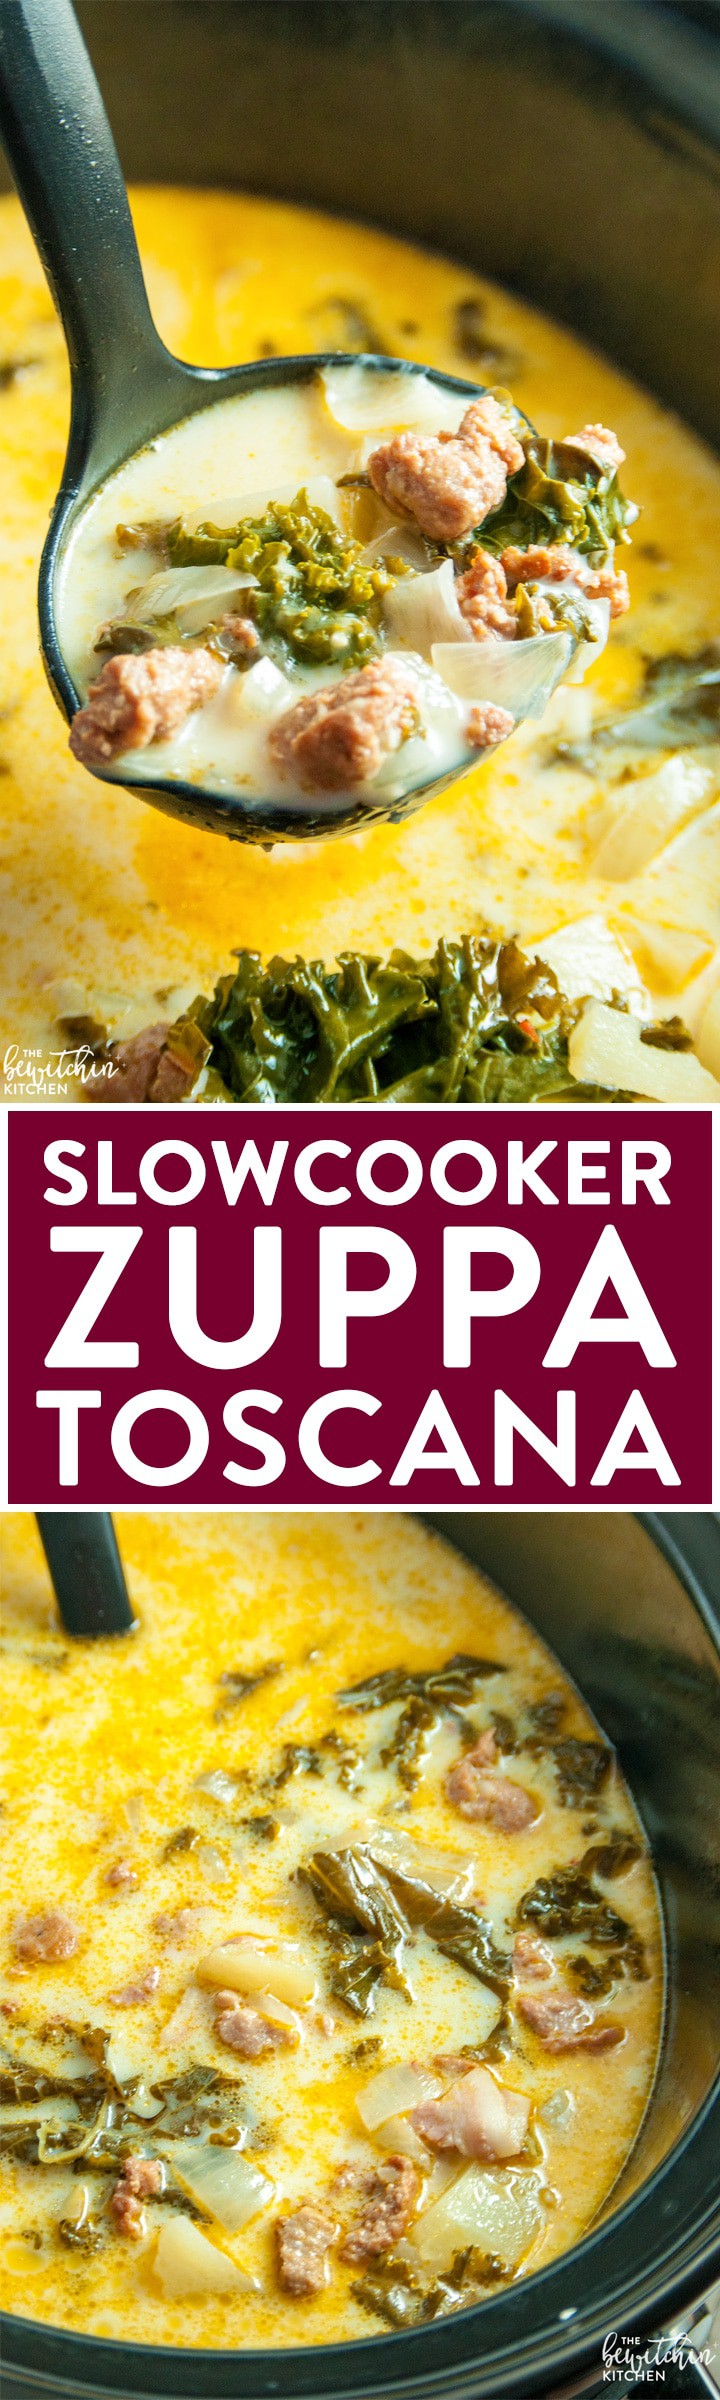 Zuppa Toscana Crock Pot Recipe | The Bewitchin' Kitchen